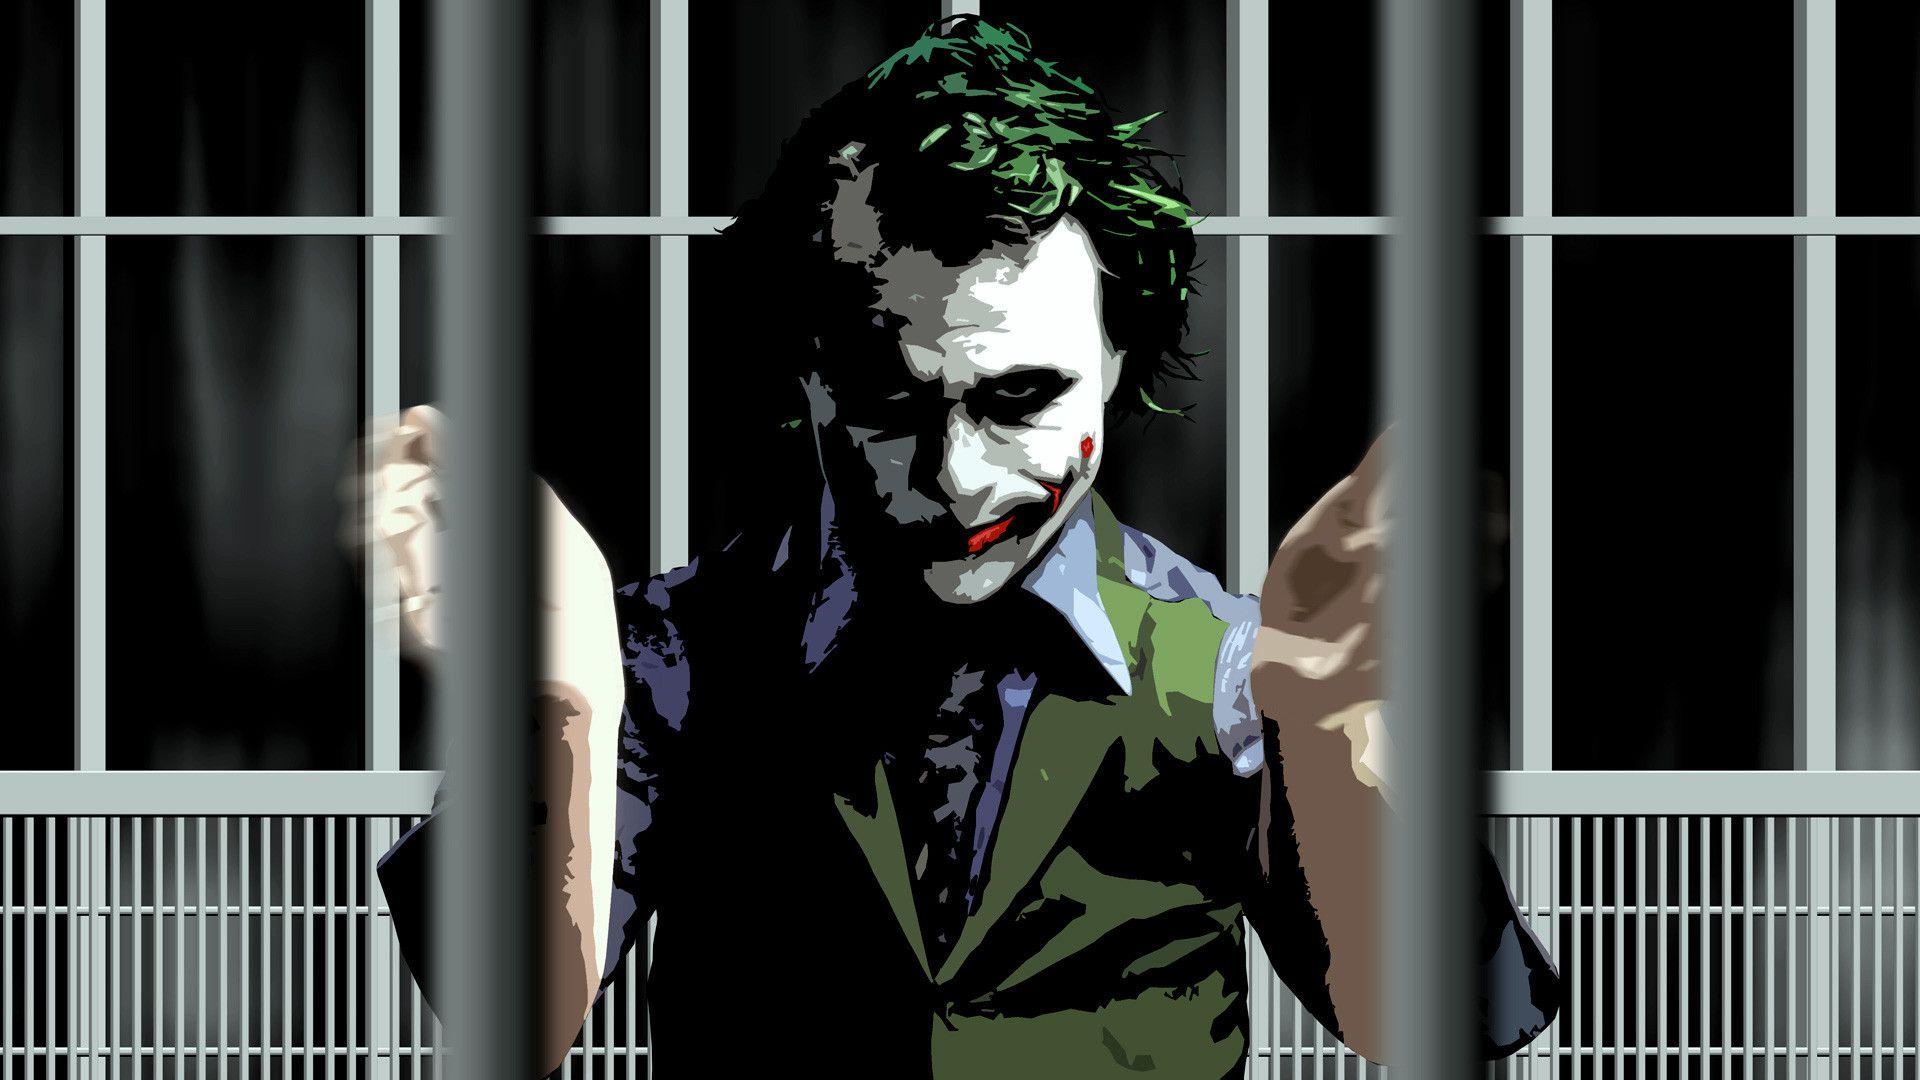 Dark Knight Joker In 4k Ultra Hd Wallpapers Top Free Dark Knight Joker In 4k Ultra Hd Backgrounds Wallpaperaccess